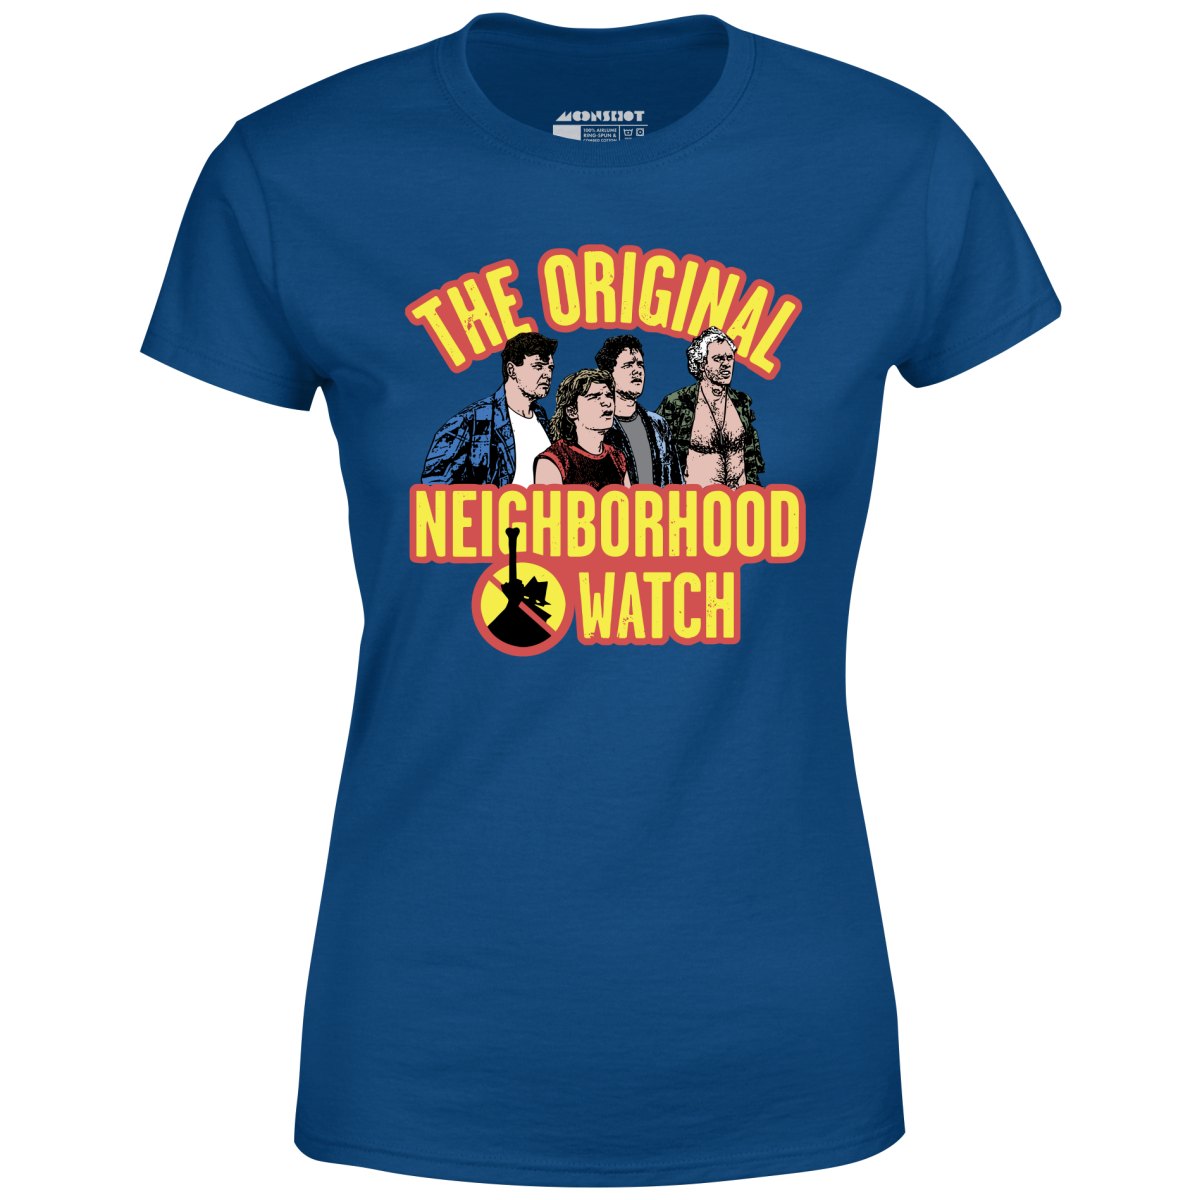 The Original Neighborhood Watch - Women's T-Shirt